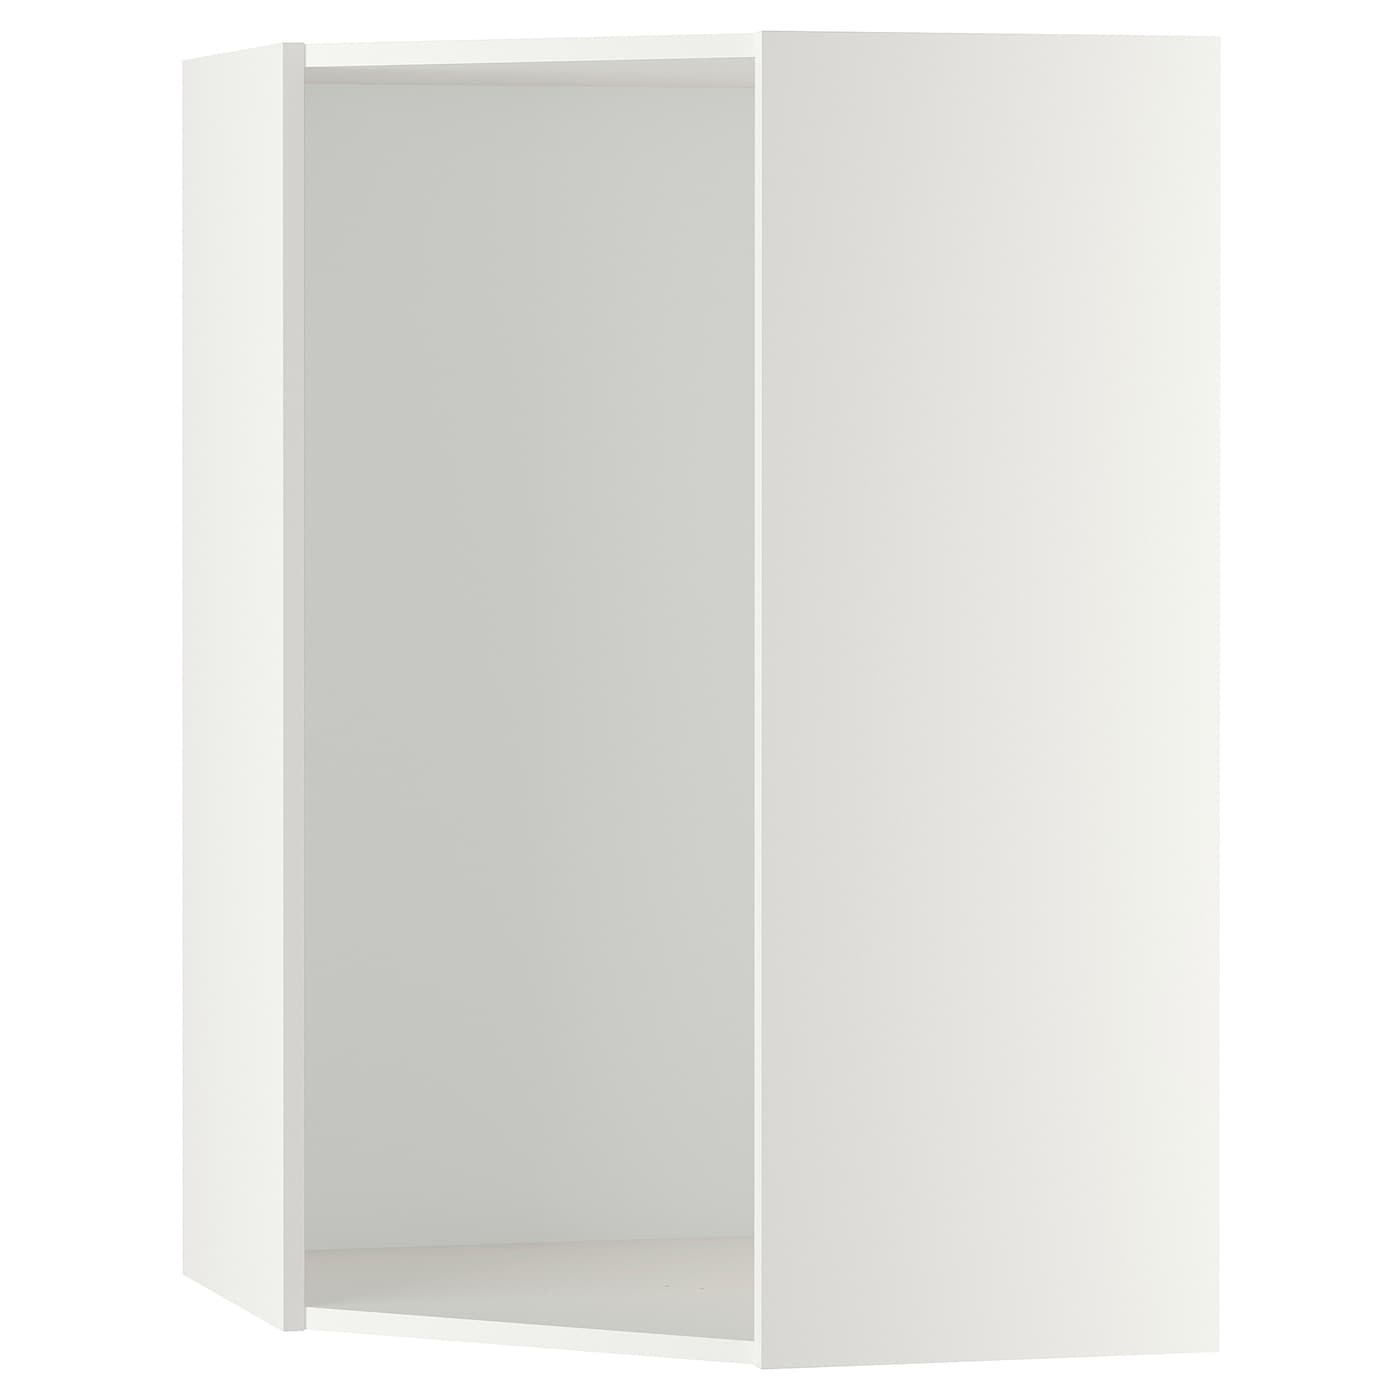 Metod Corner Wall Cabinet Frame - White 68X68X80 Cm intérieur Ikea Meuble Case